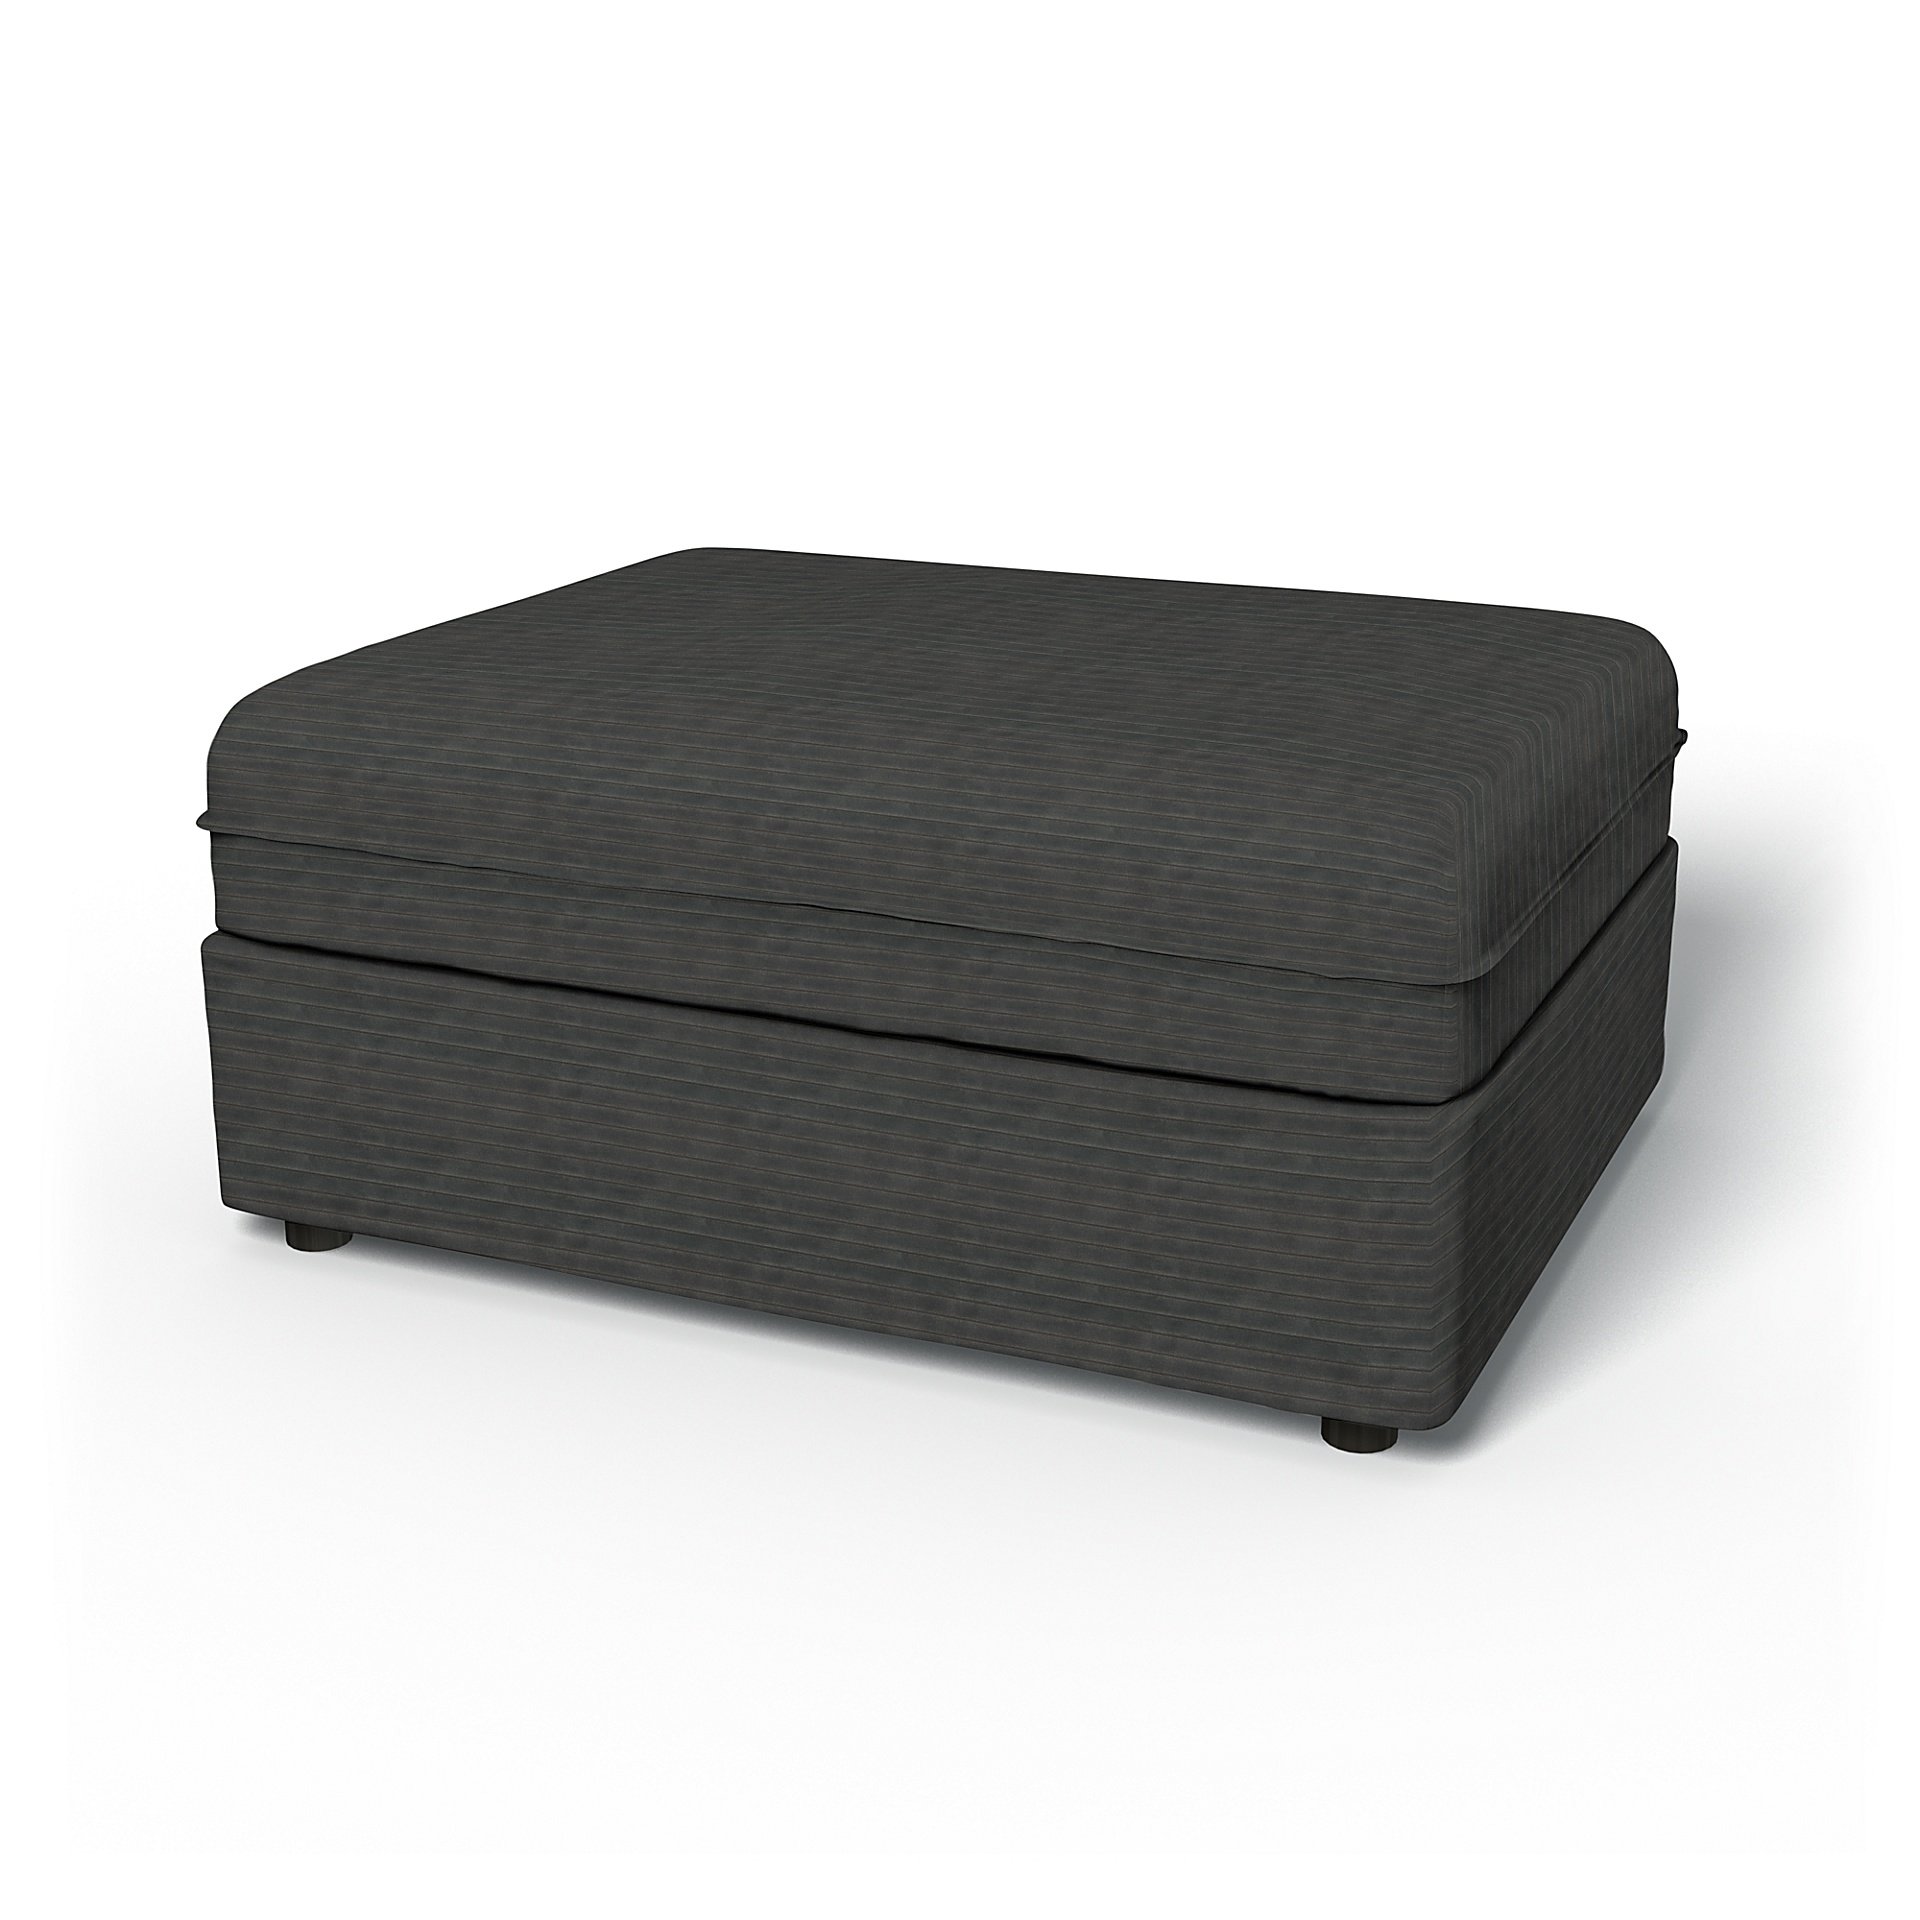 IKEA - Vallentuna Seat Module Cover 100x80cm 39x32in, Licorice, Corduroy - Bemz